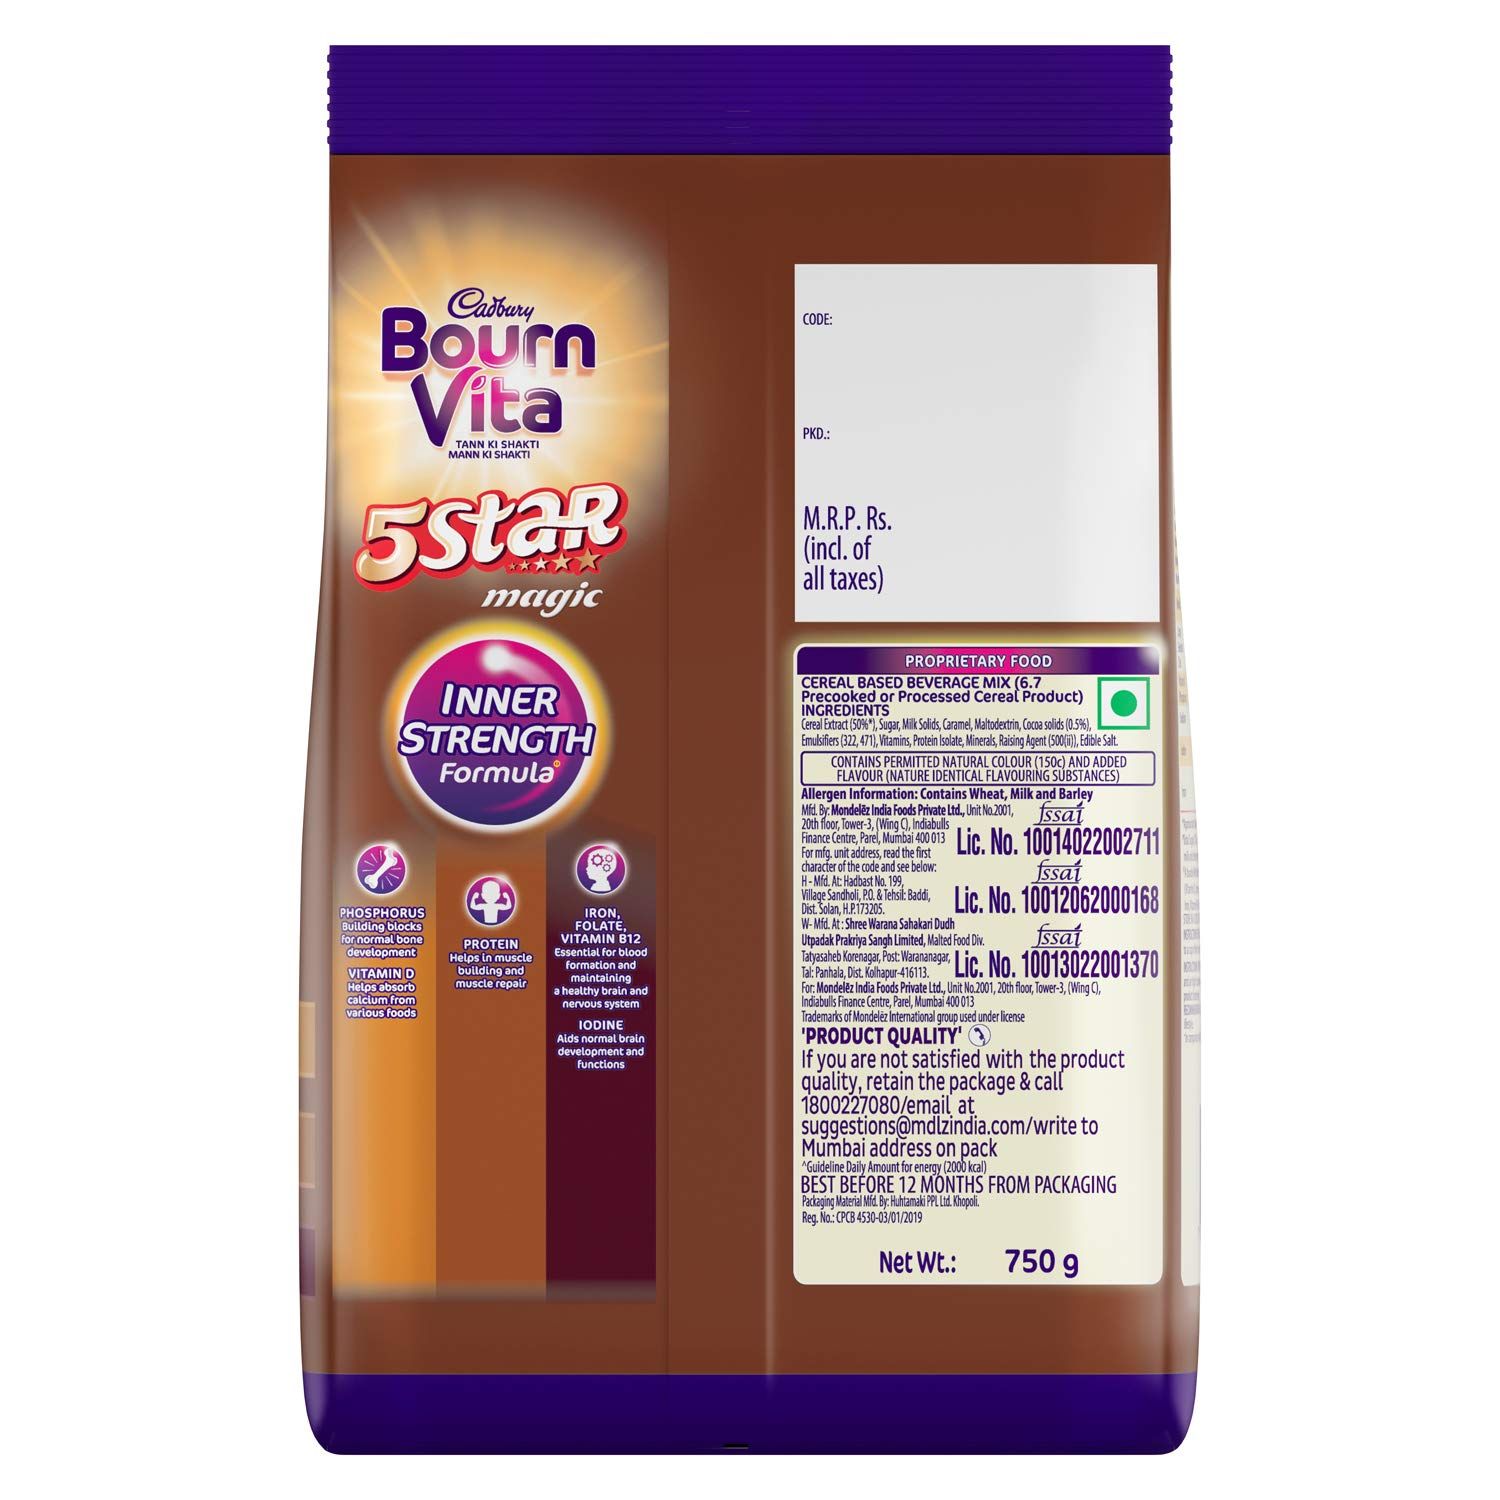 Bournvita Cadbury 5 Star Magic Health Drink Image